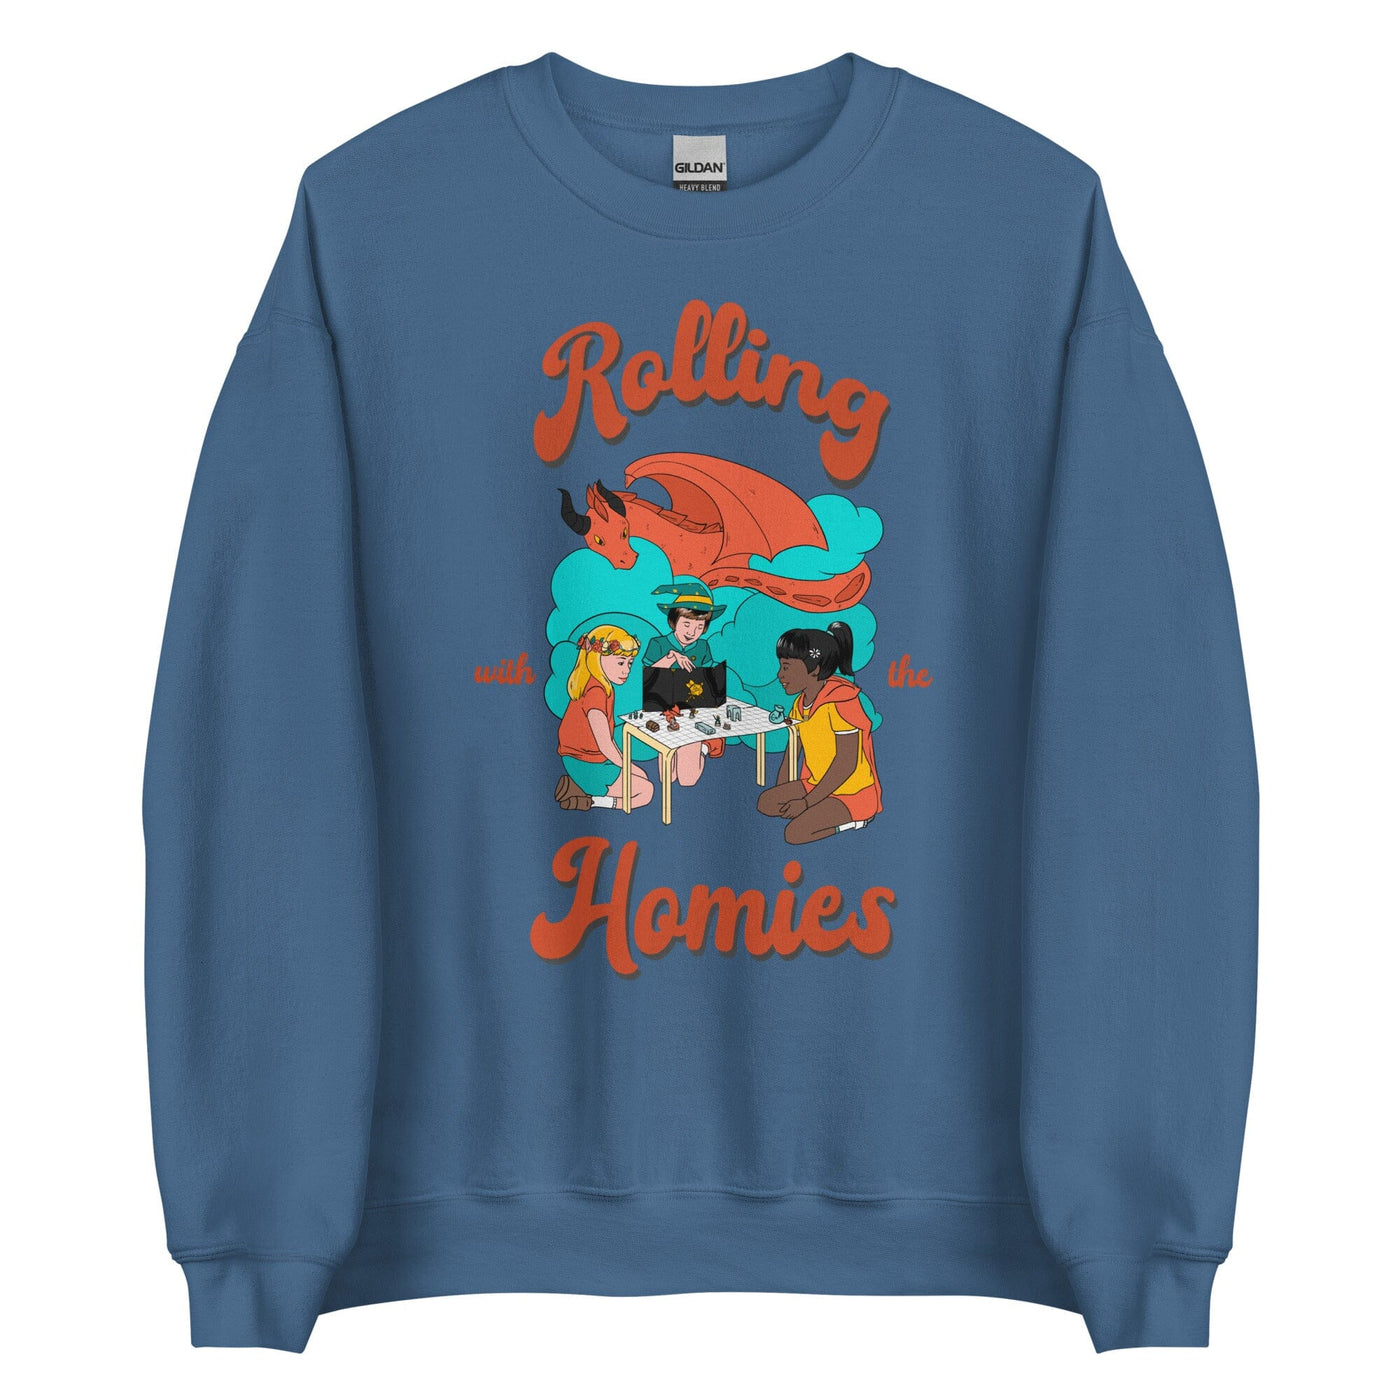 Rolling with the Homies | Unisex Sweatshirt | Retro Gaming Threads & Thistles Inventory Indigo Blue S 